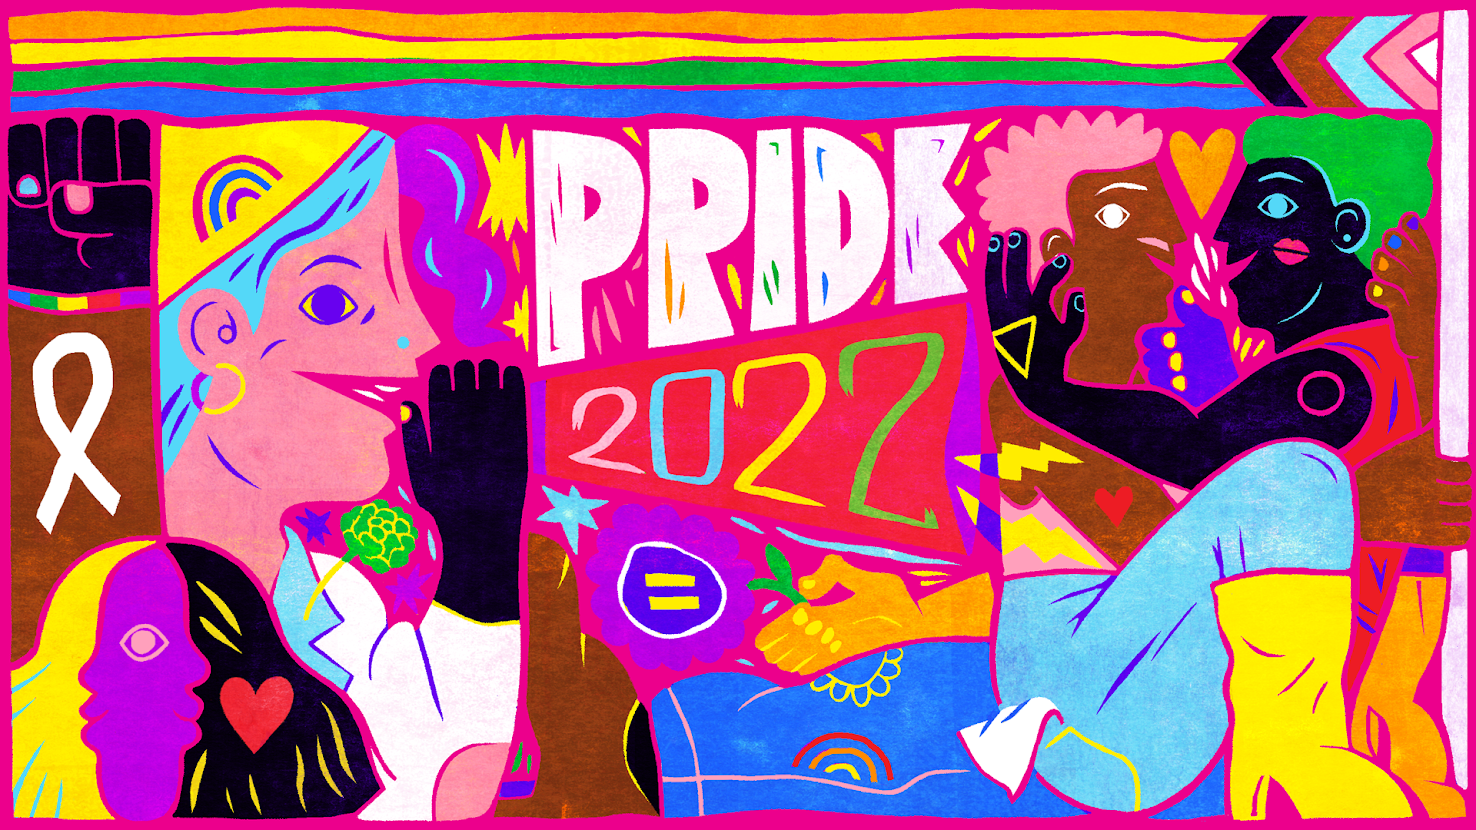 Artistic and colorful mural celebrating Pride 2022